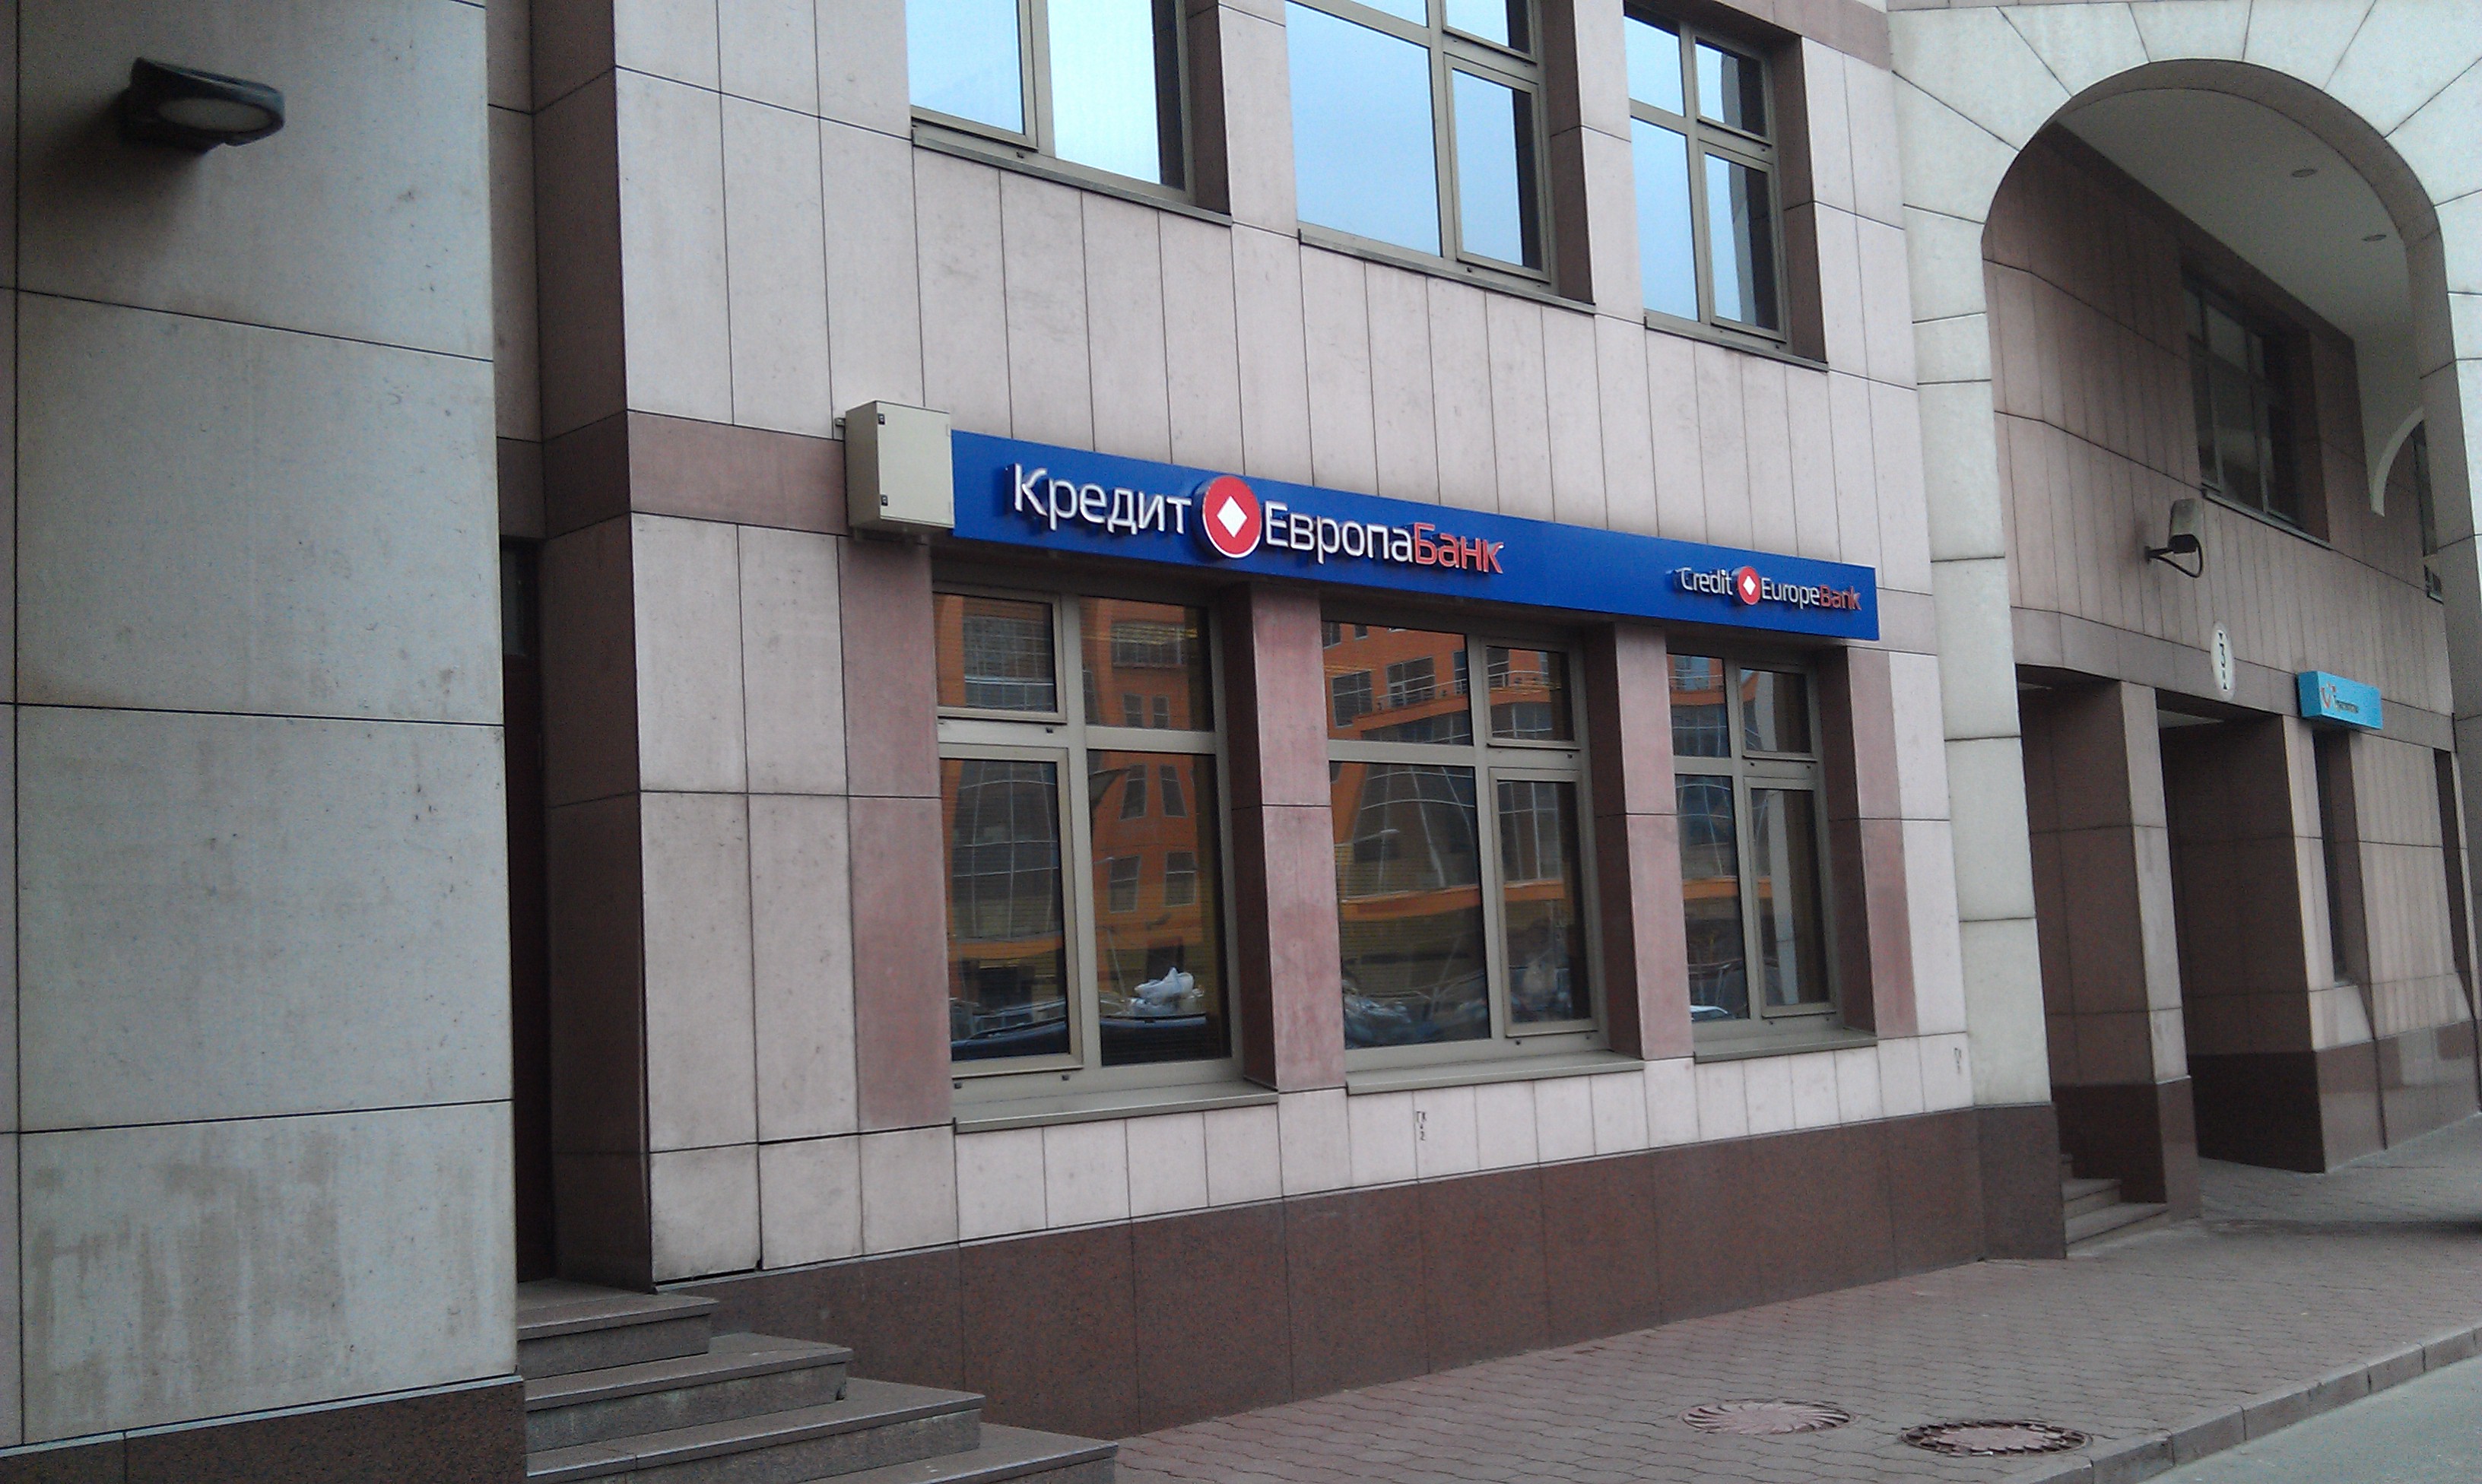 Кредитные банки оренбурга. Европа банк. Банк Новосибирск. Кредит Европа банк фото. Отделение банка кредит Европа.